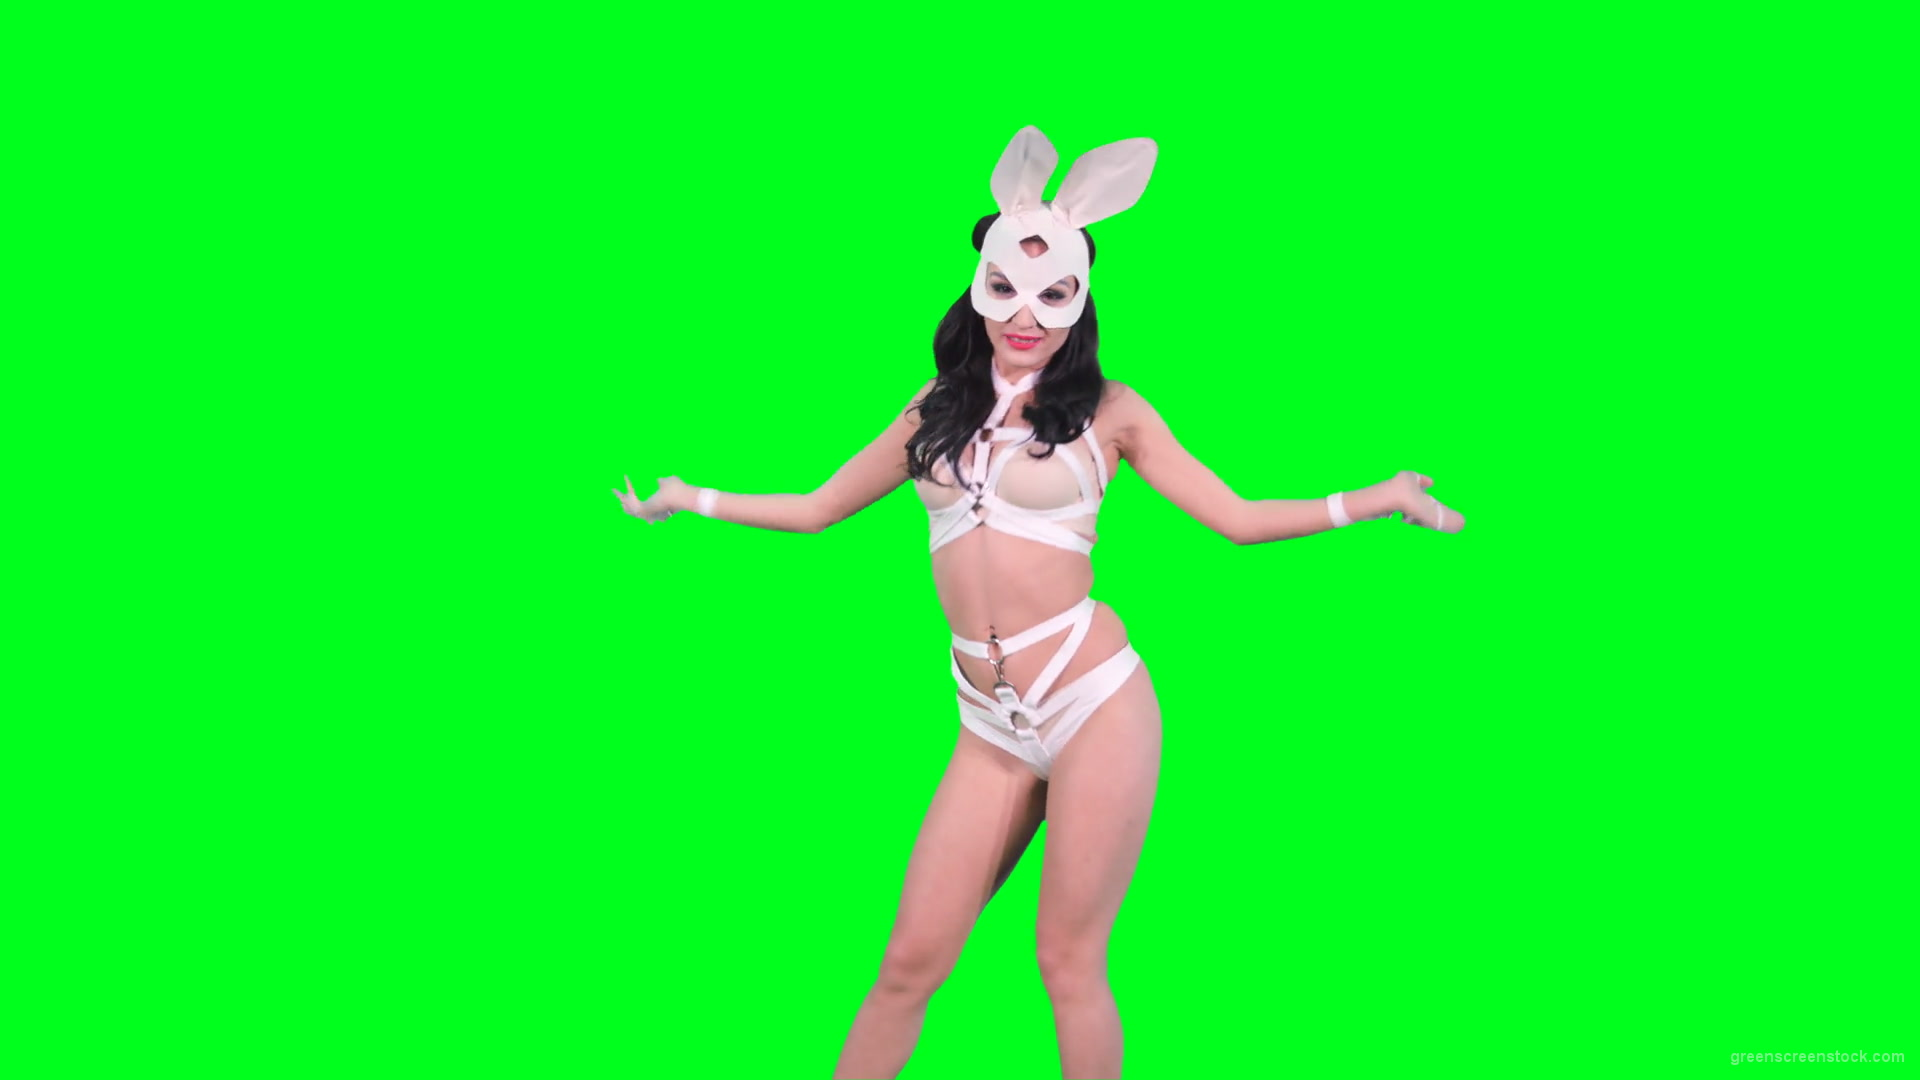 Green-Srcreen-Girl-in-rabbit-costume-sending-air-kiss-4k-Video-Footage-1920_004 Green Screen Stock